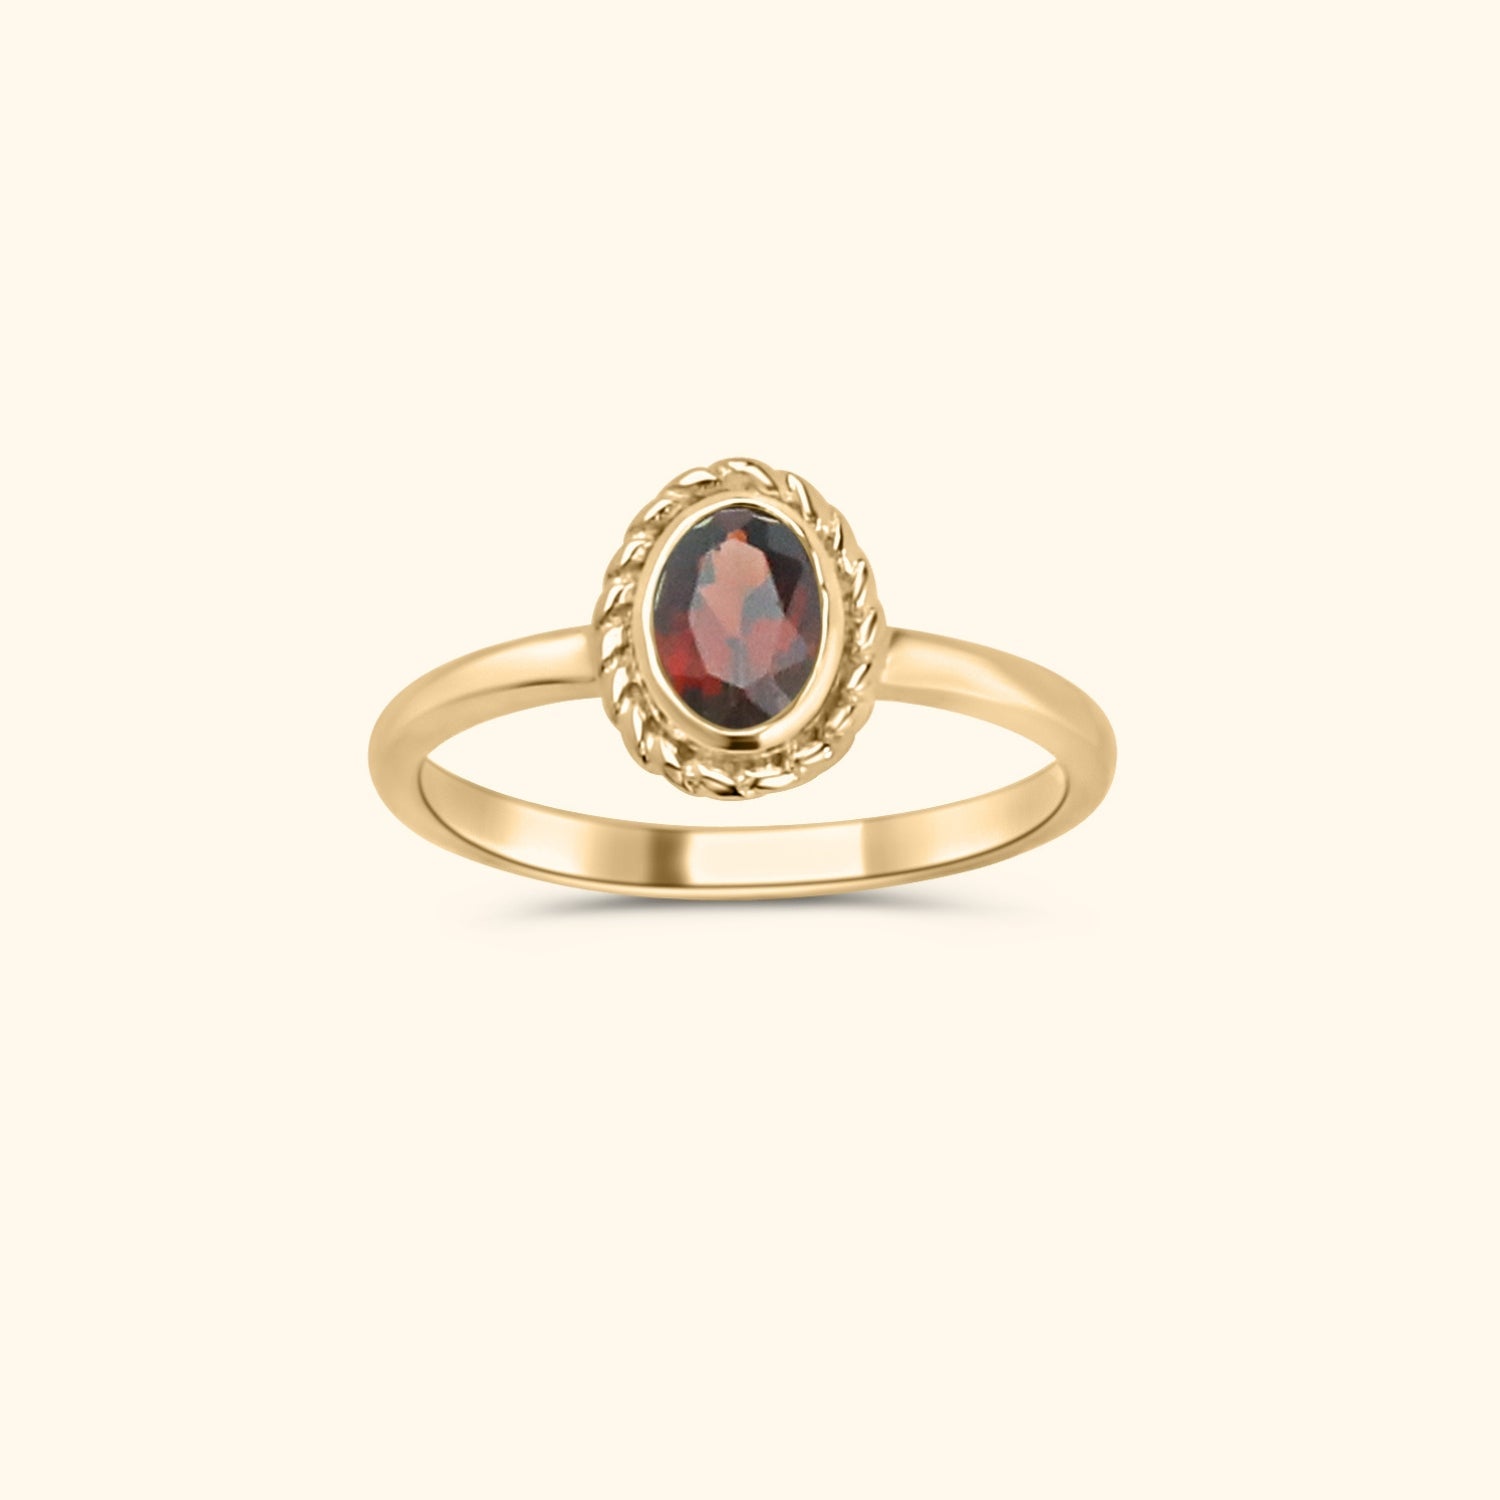 January Garnet - Birthstone ring